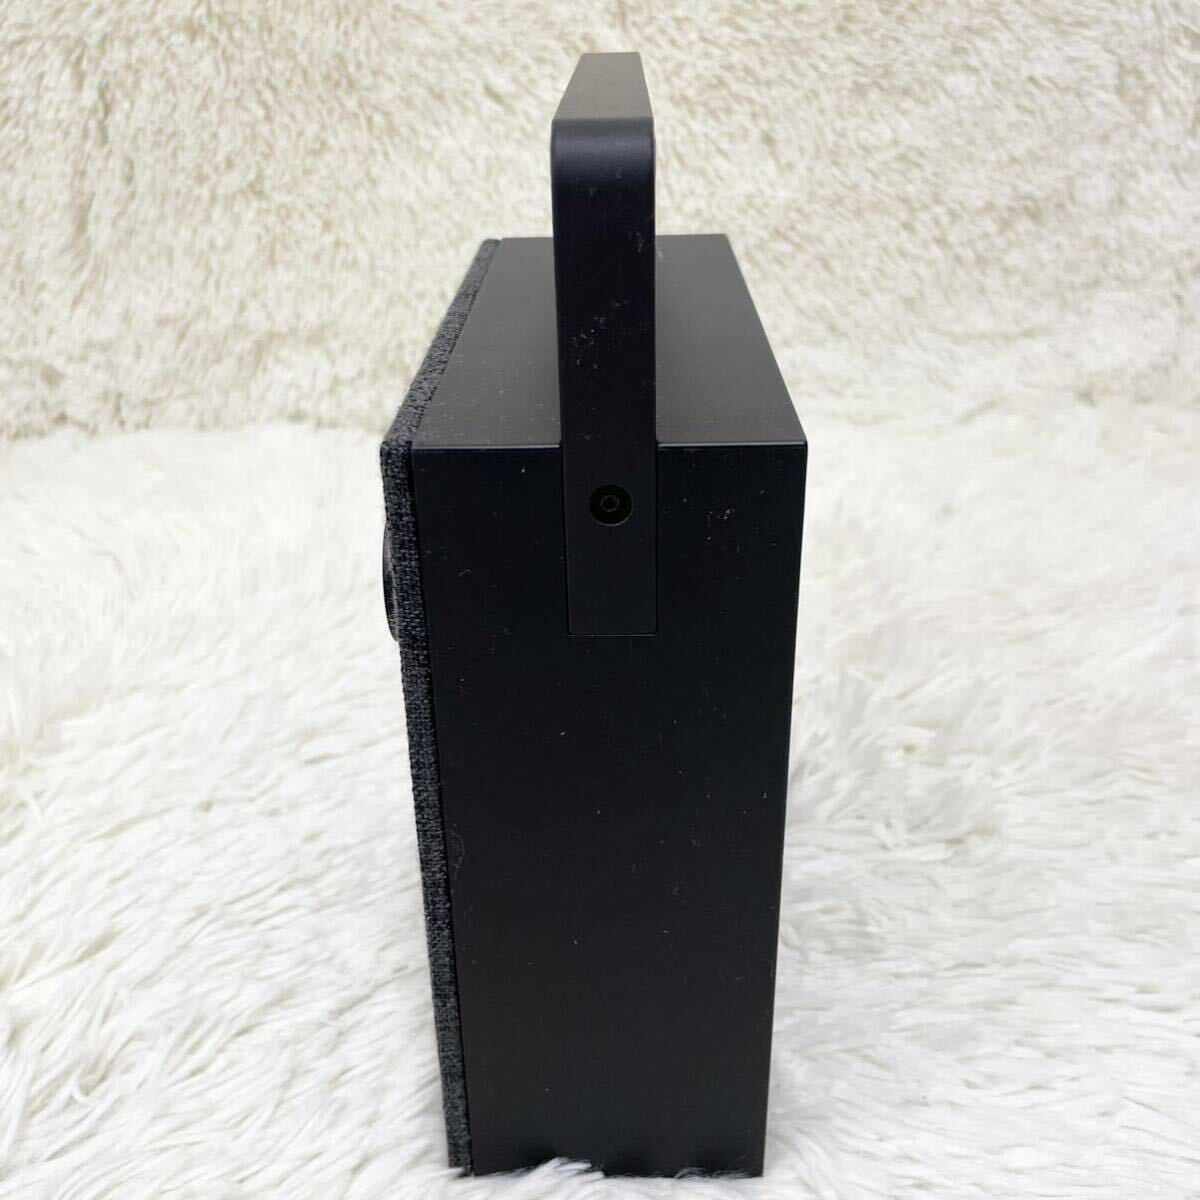  beautiful goods used Ikea IKEA speaker ENEBYene Be E1270 black Bluetooth speaker battery entering portable possibility 20×20cm